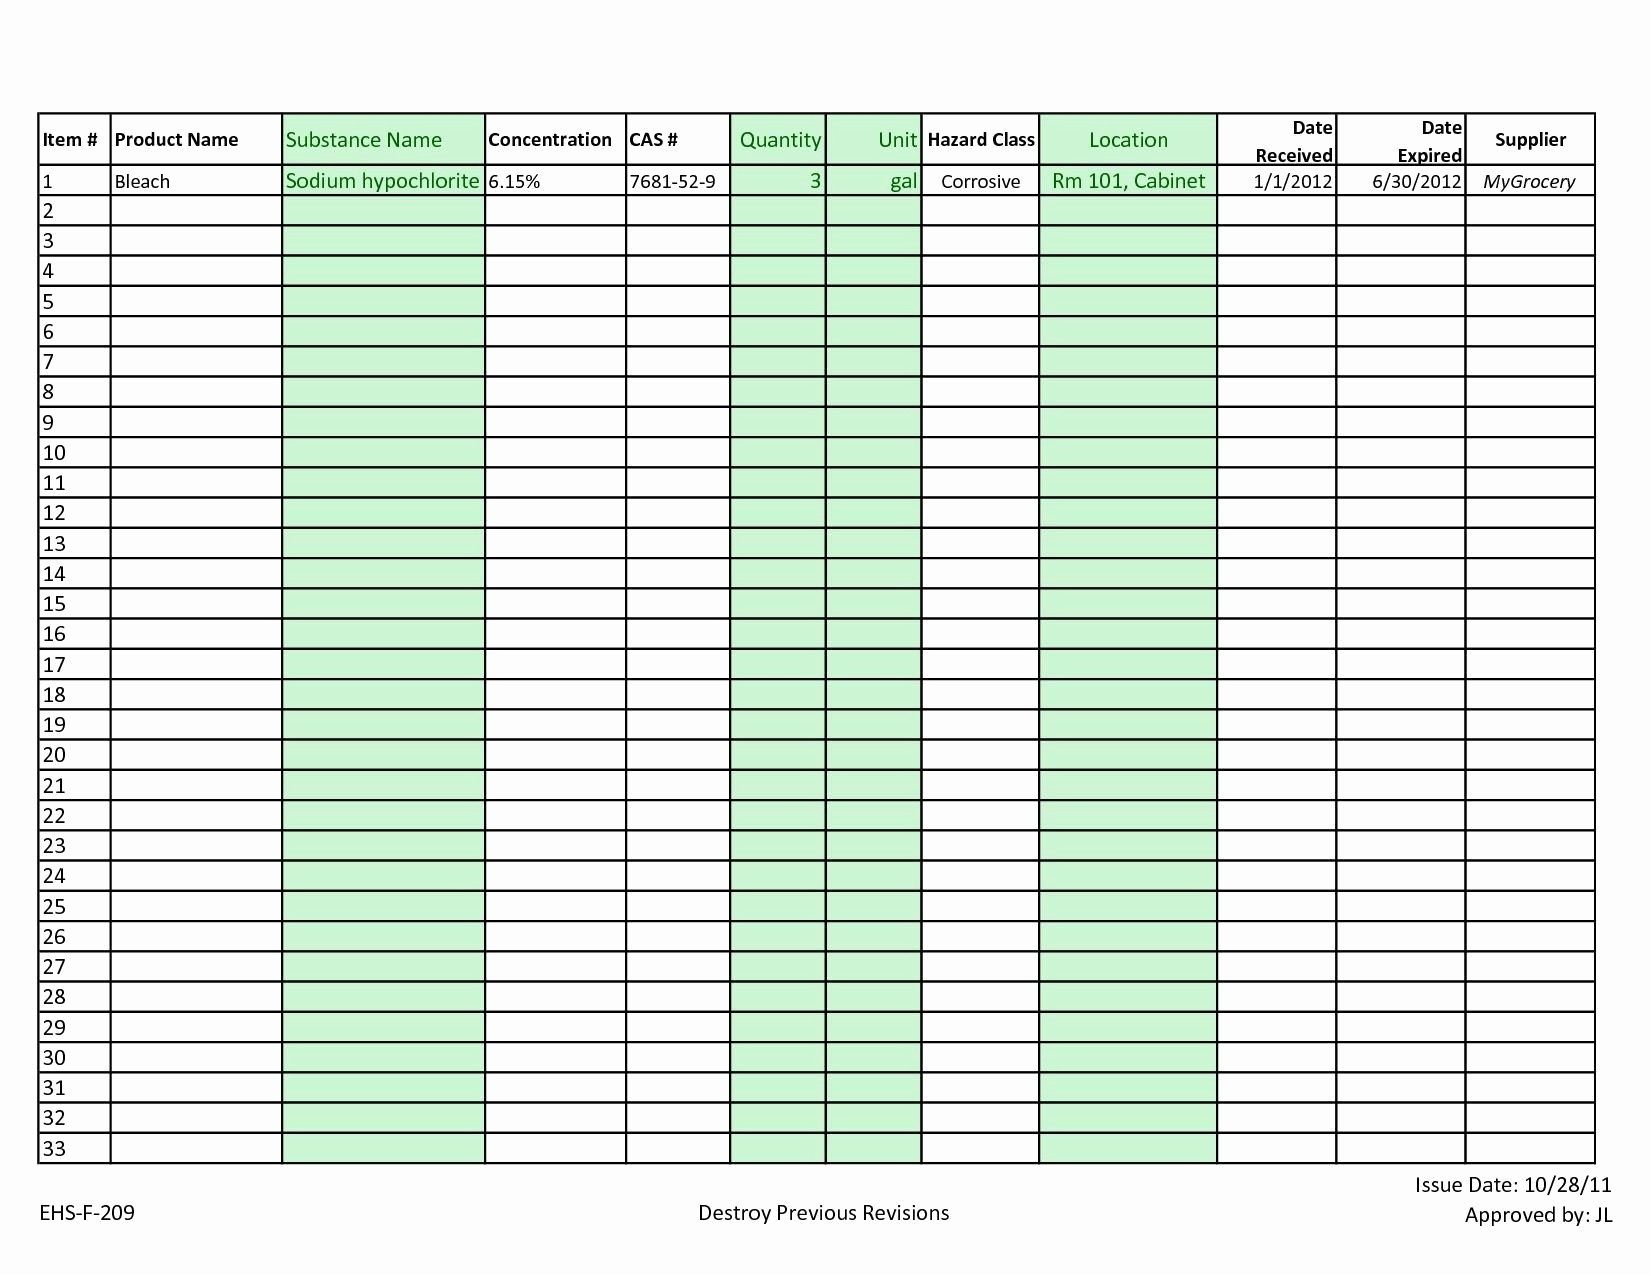 Printable Blank Inventory Spreadsheet Inventory Spreadshee Blank